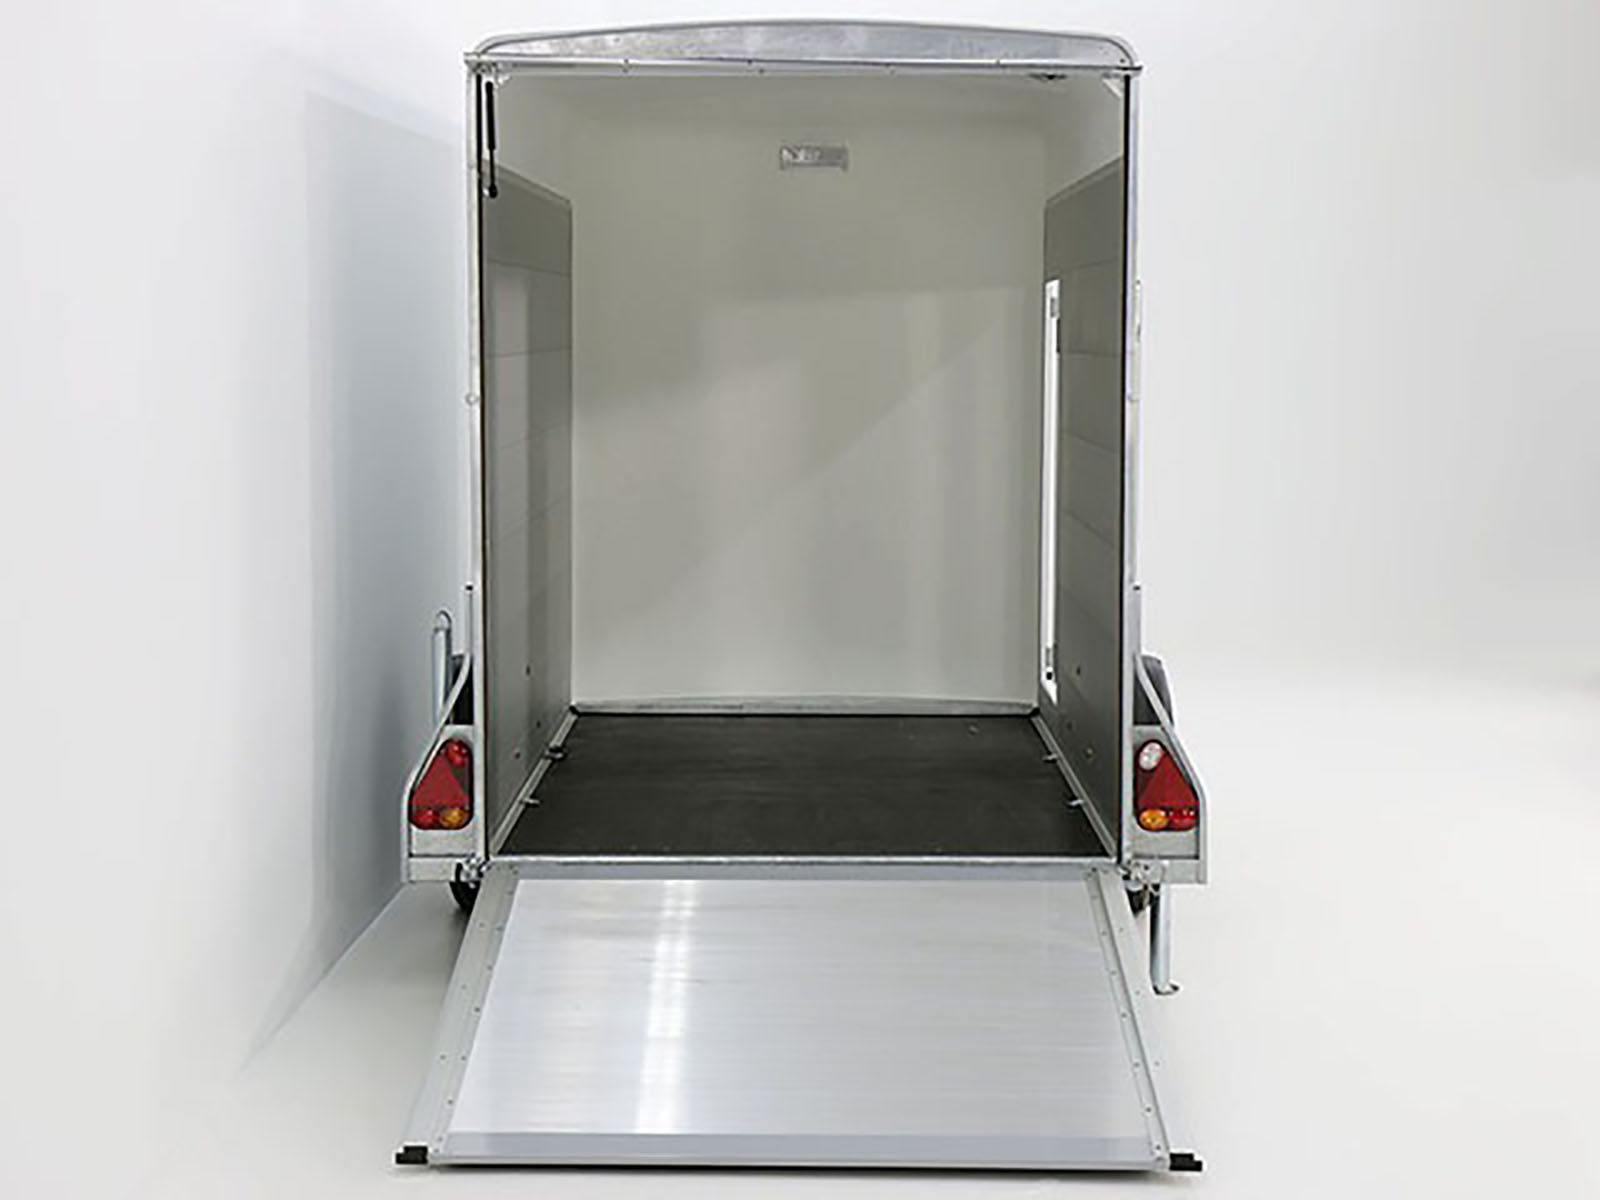 Gebraucht Sonstige Koffer Anhaenger Debon Kofferanhaenger C300 148x295cm H 190cm 1 3t Alu Polybug Tuer grau_Ko1777SoCl_3zlqz39IAdgTOe